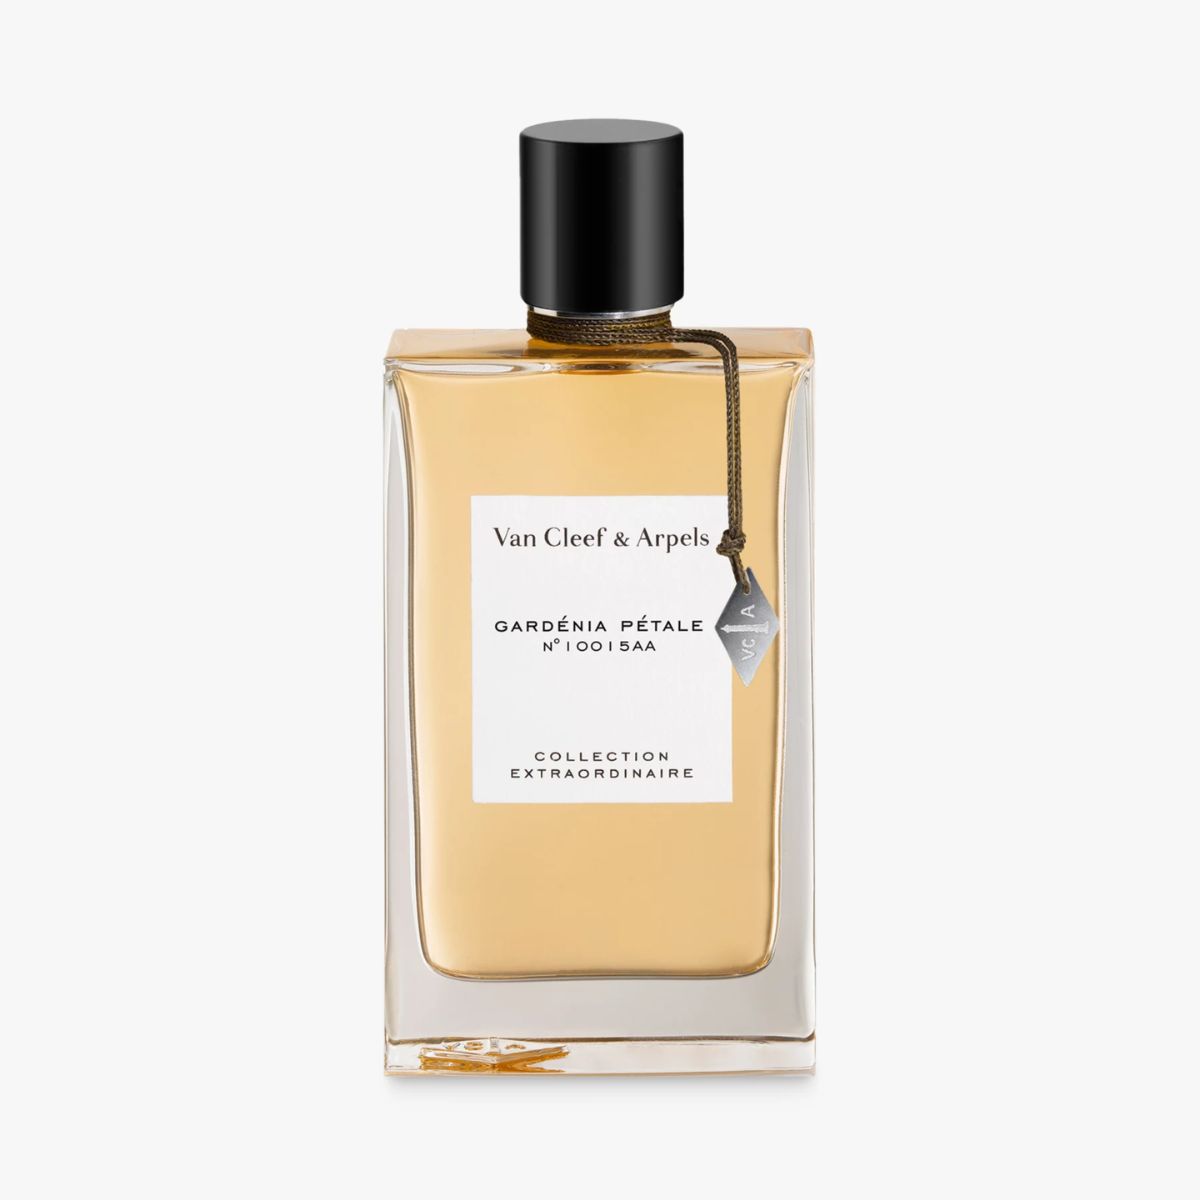 Van Cleef & Arpels Collection Extraordinaire Gardénia Pétale Eau de Parfum